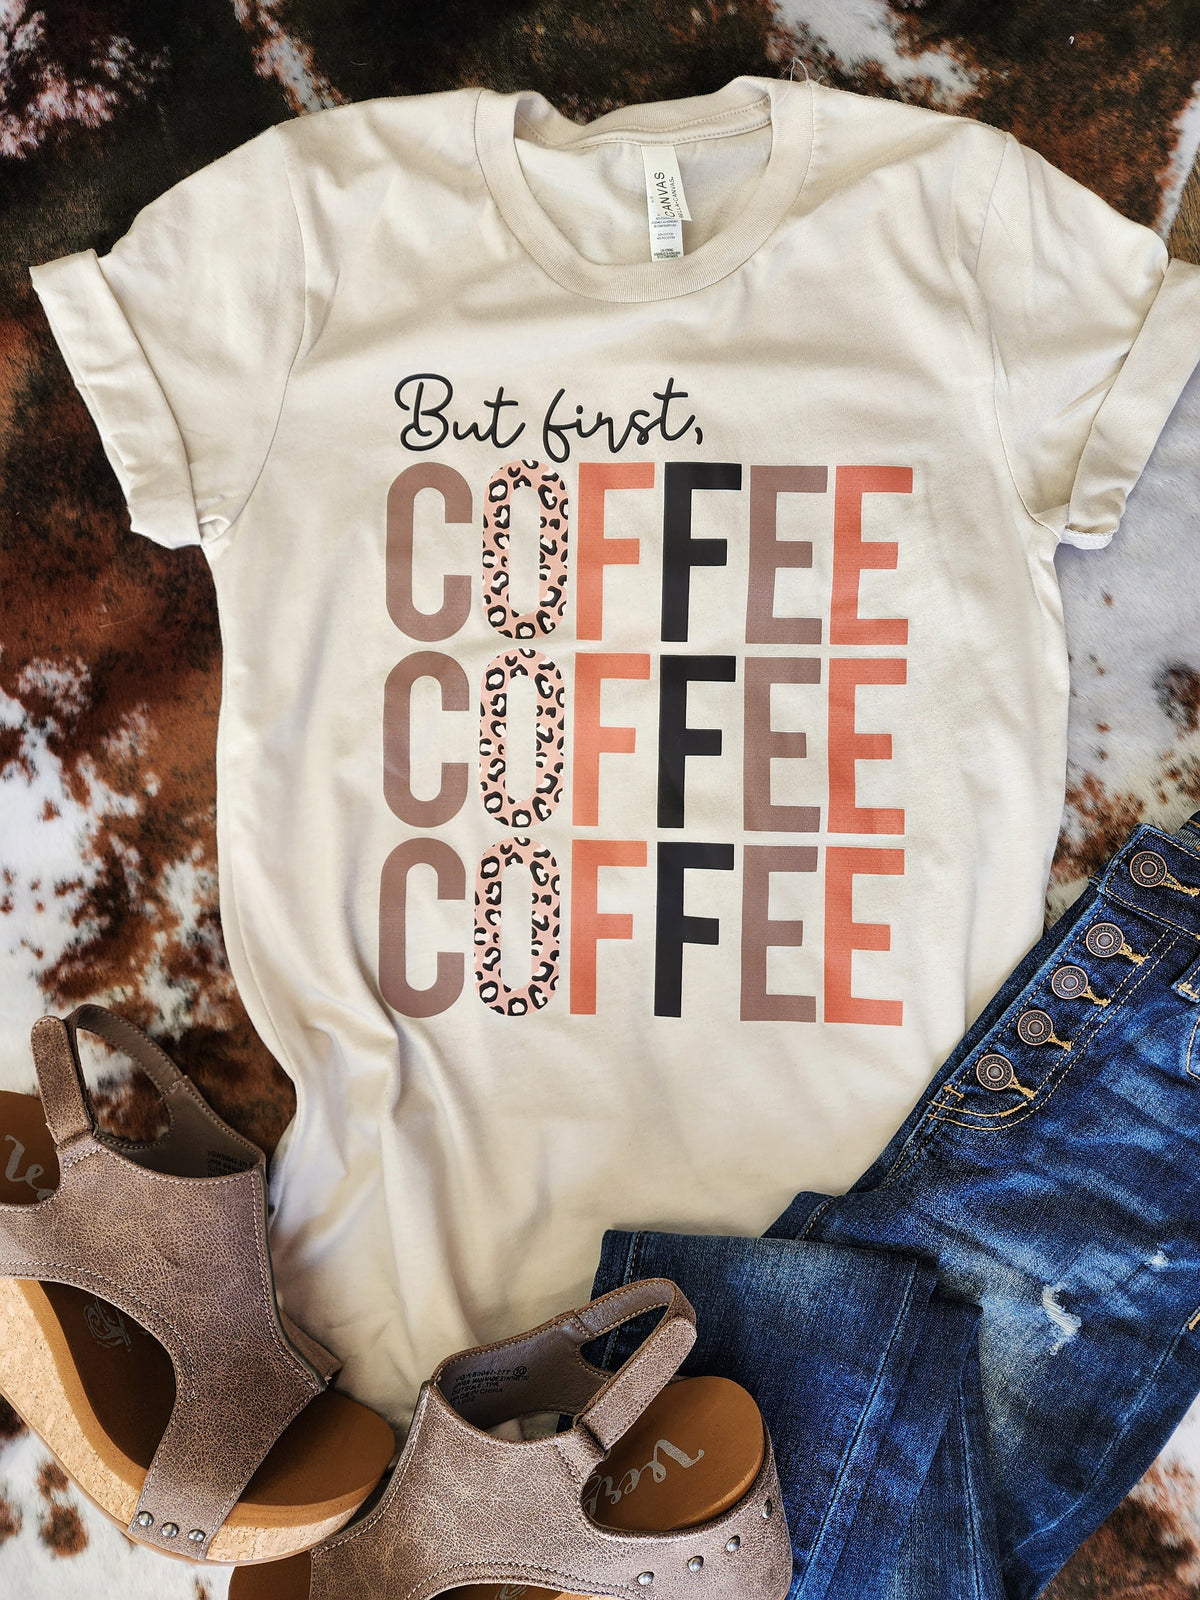 "But first, coffee coffee coffee" graphic tee * on sale